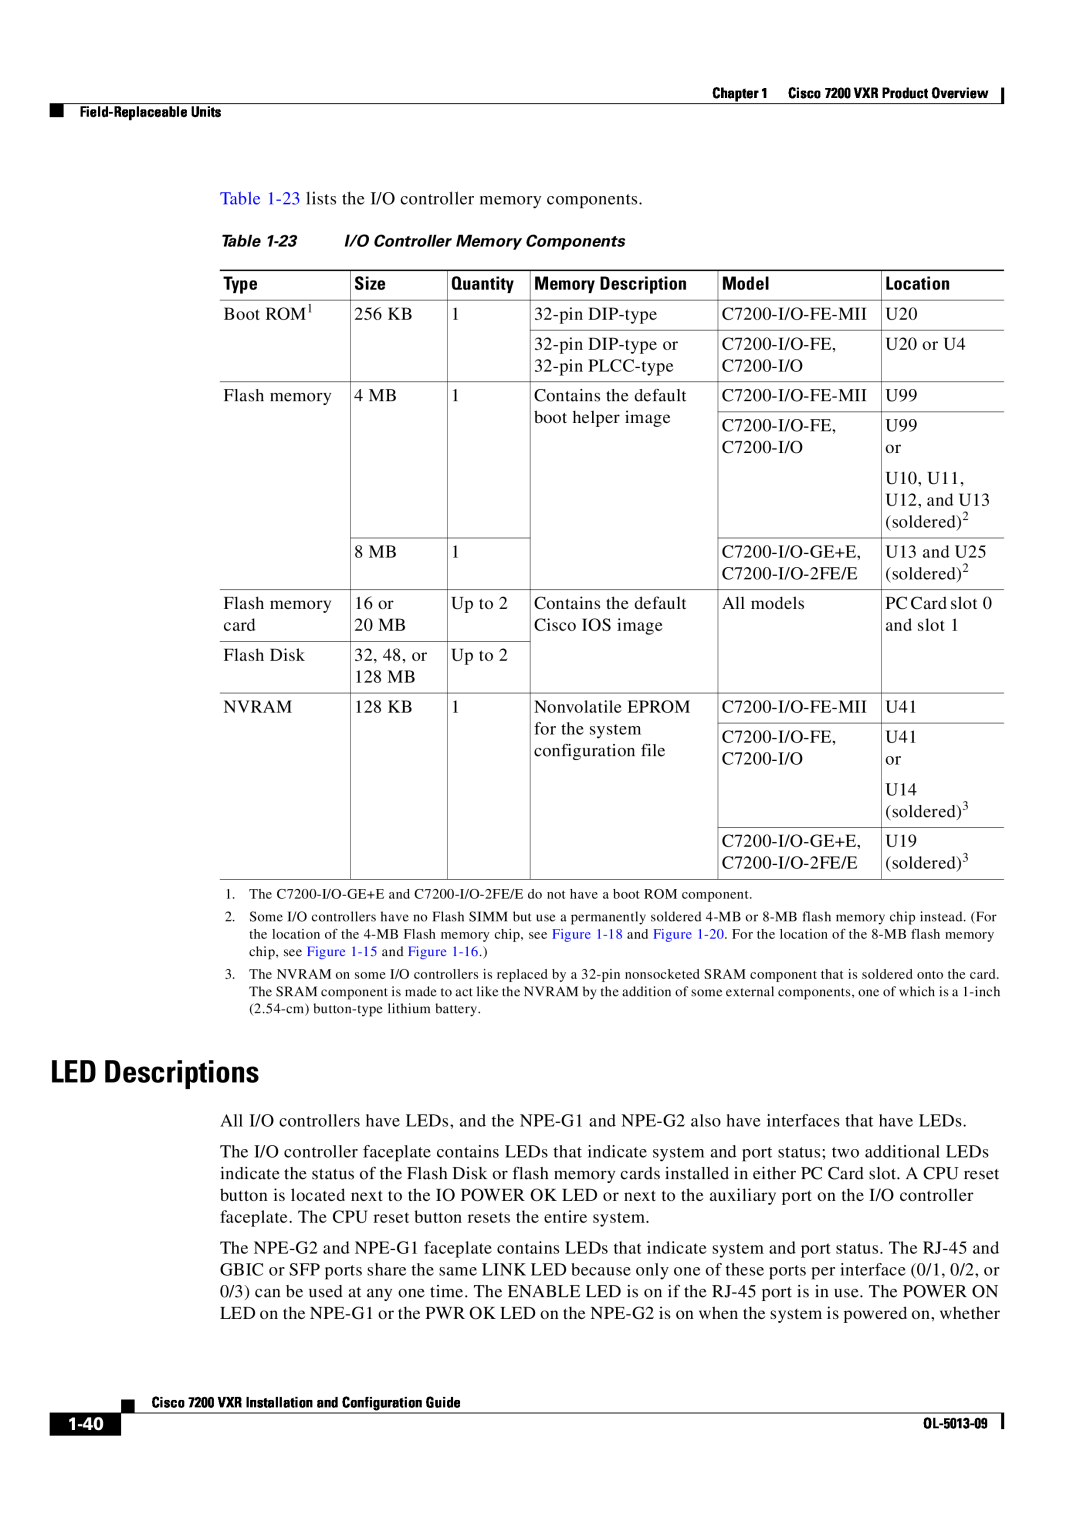 Cisco Systems 7200 VXR manual LED Descriptions, 1-40, I/O Controller Memory Components 